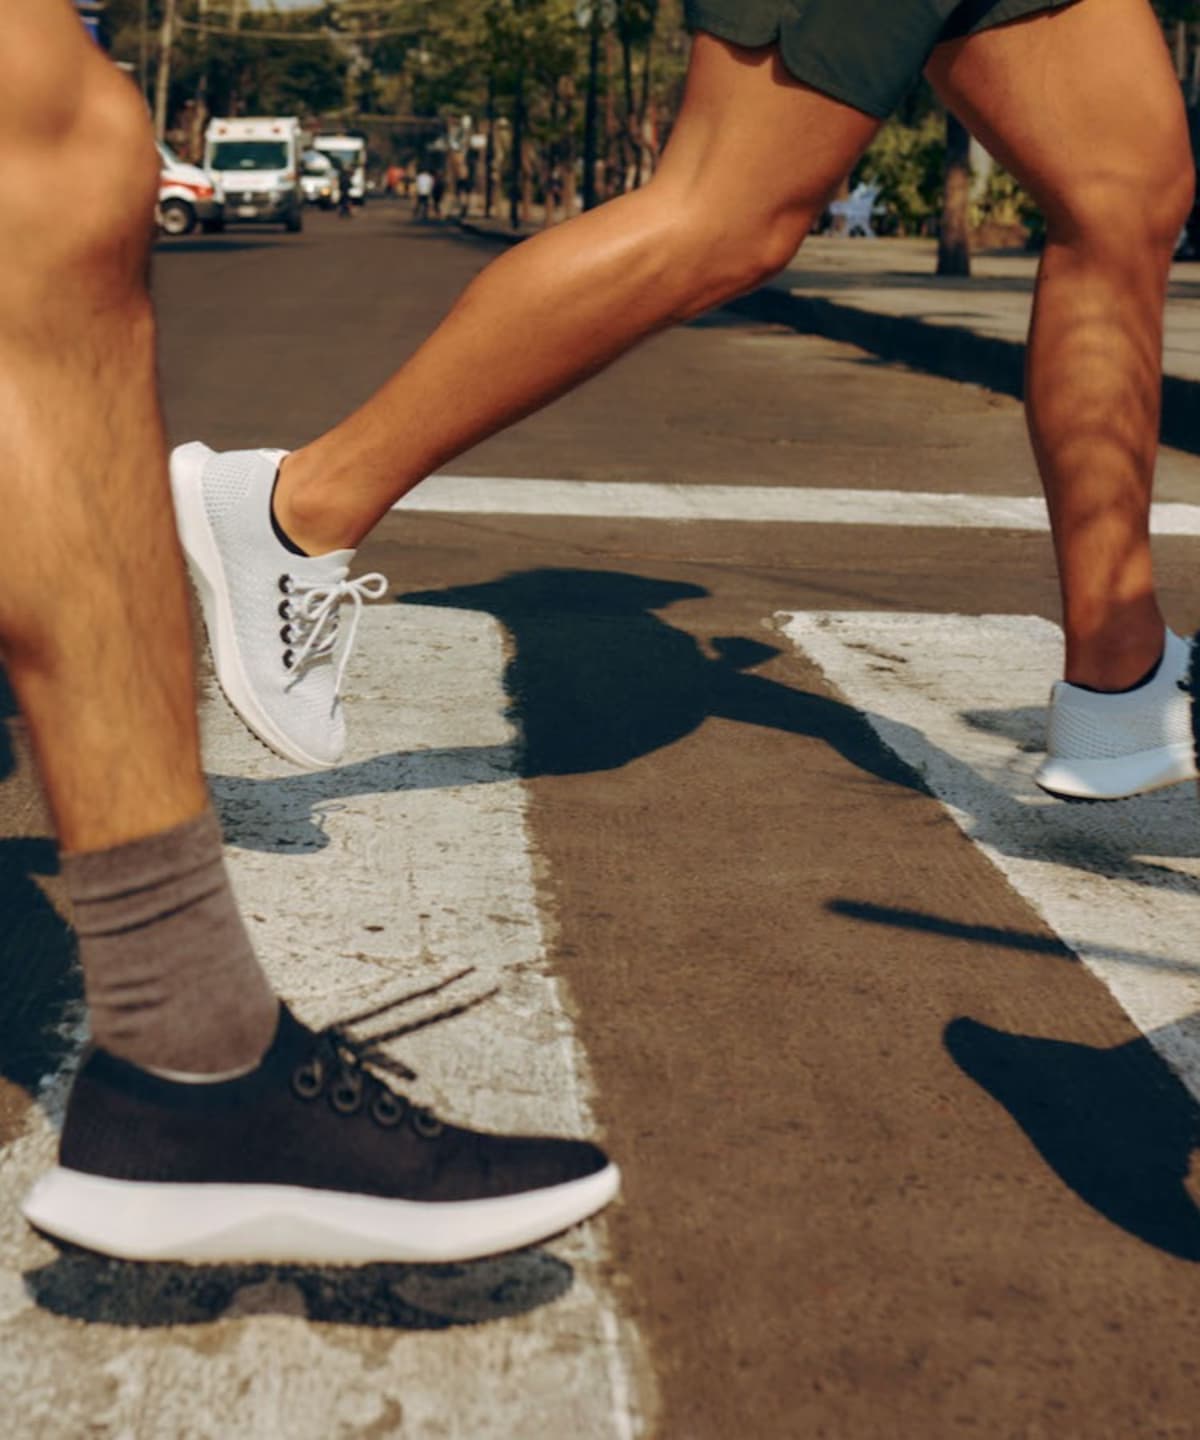 Beginner's running guide – Allsports Physio